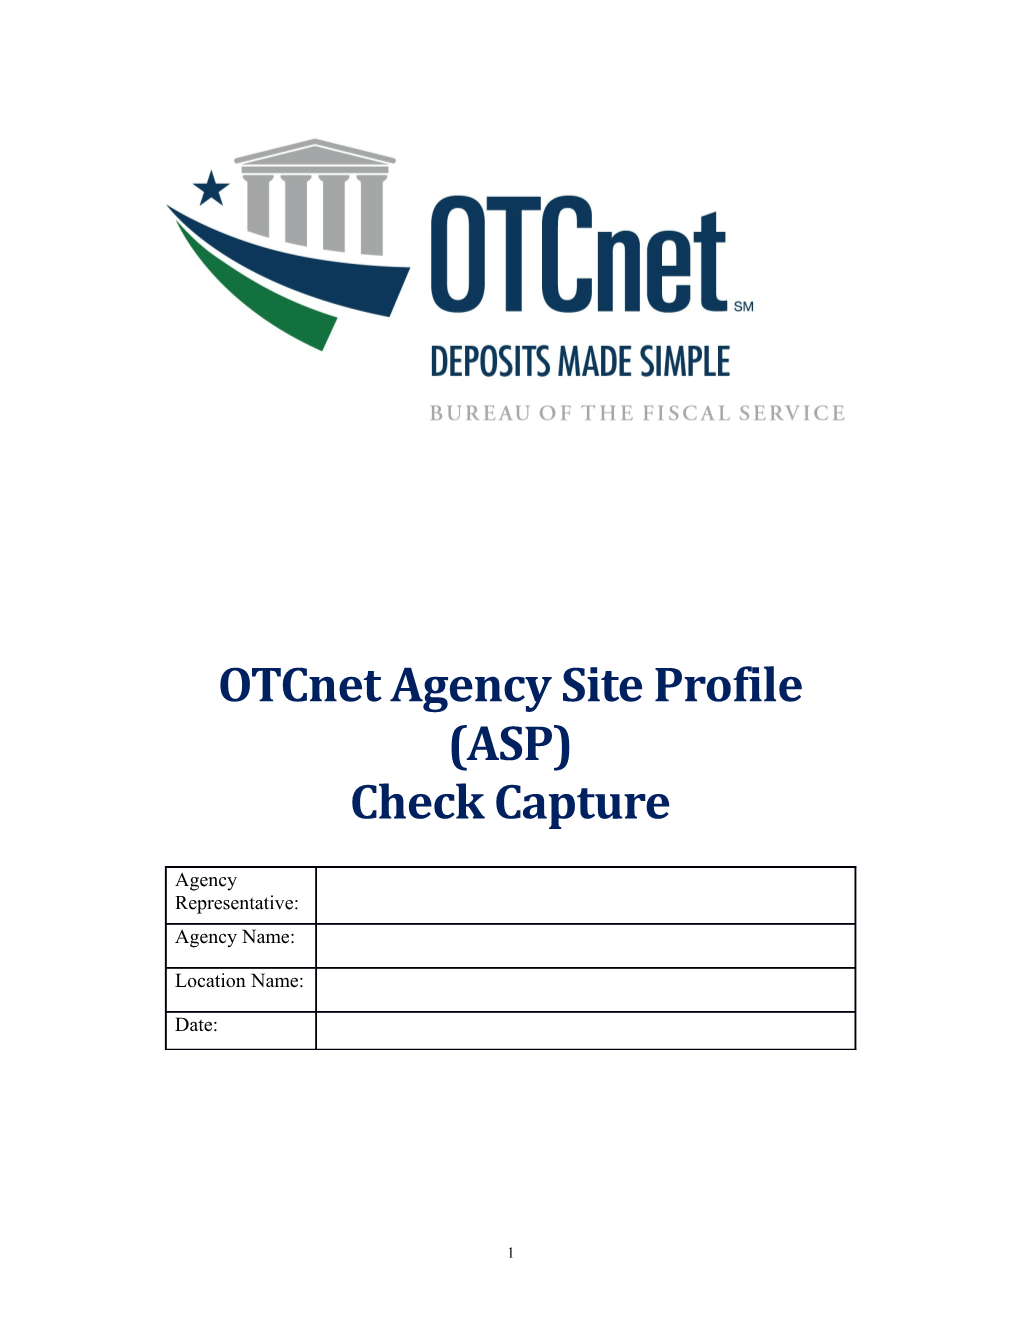 Otcnet Agency Site Profile (ASP)